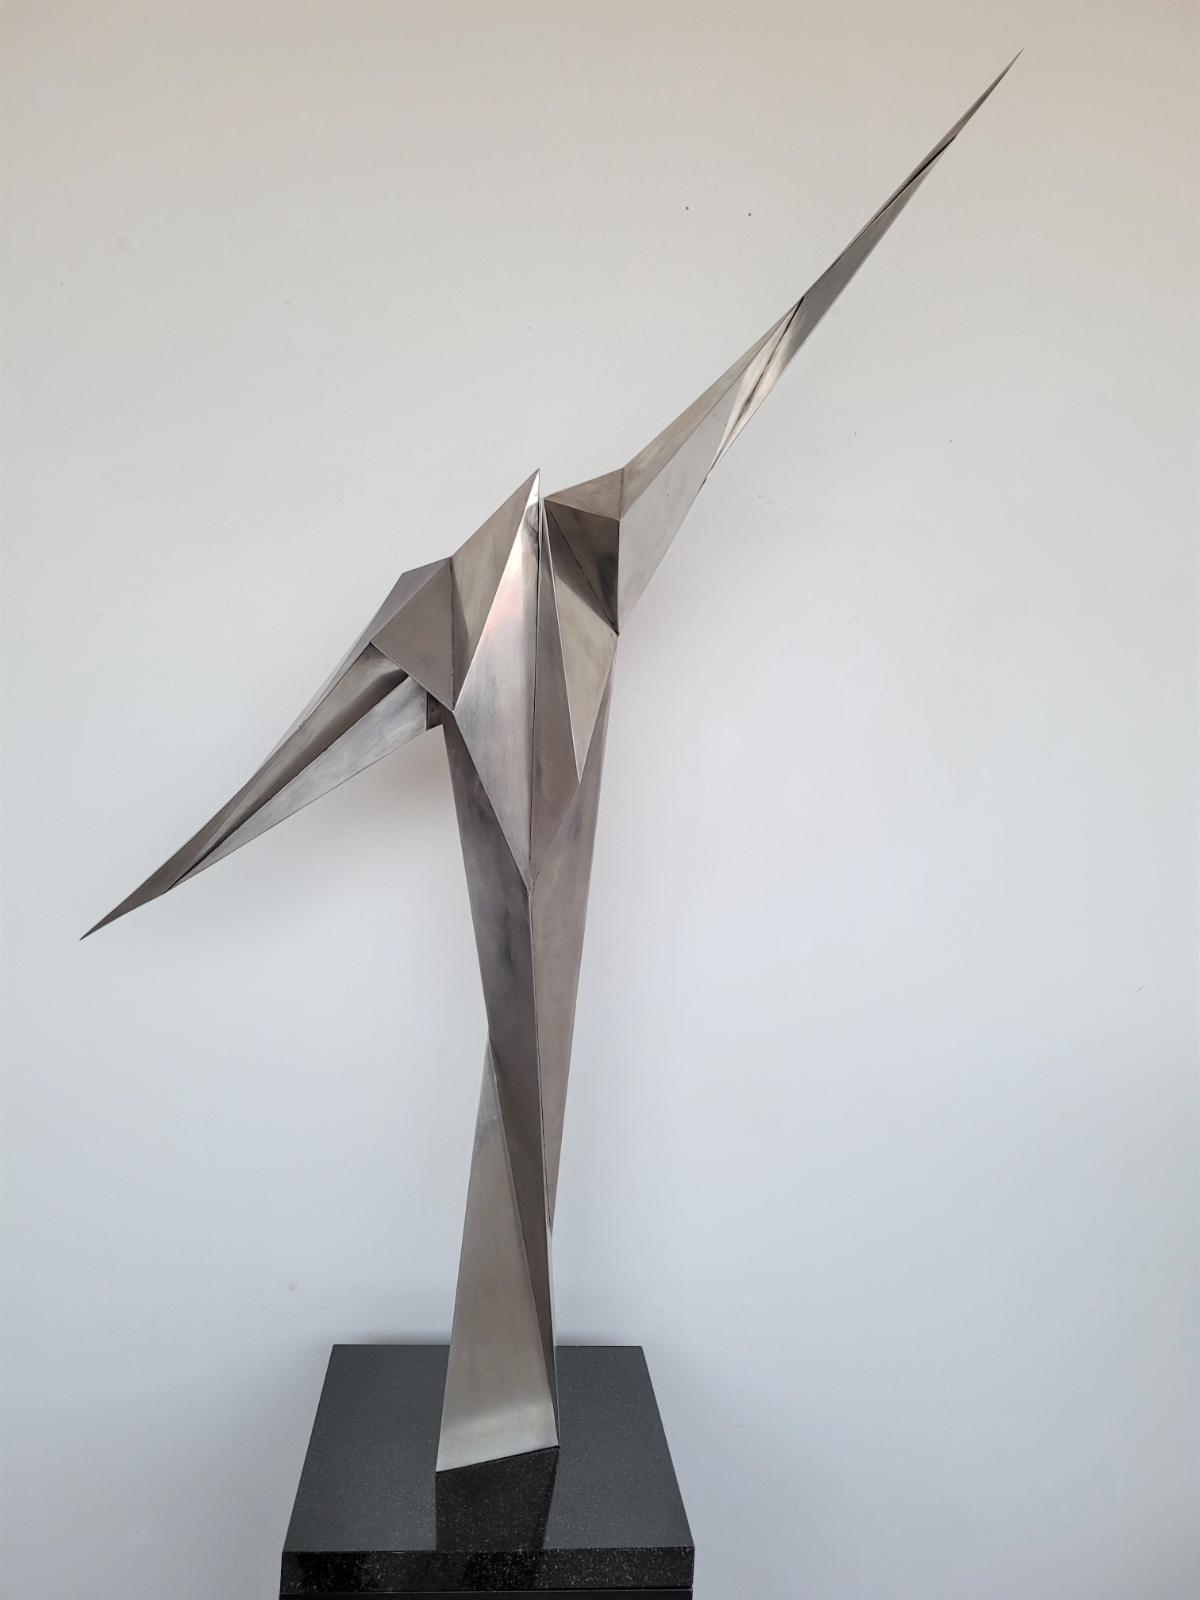 Erich Hauser, 5 89, 1989, Edelstahl, poliert, Unikat, signiert, 137 cm x 86 cm x 16 cm, Galerie Cyprian Brenner